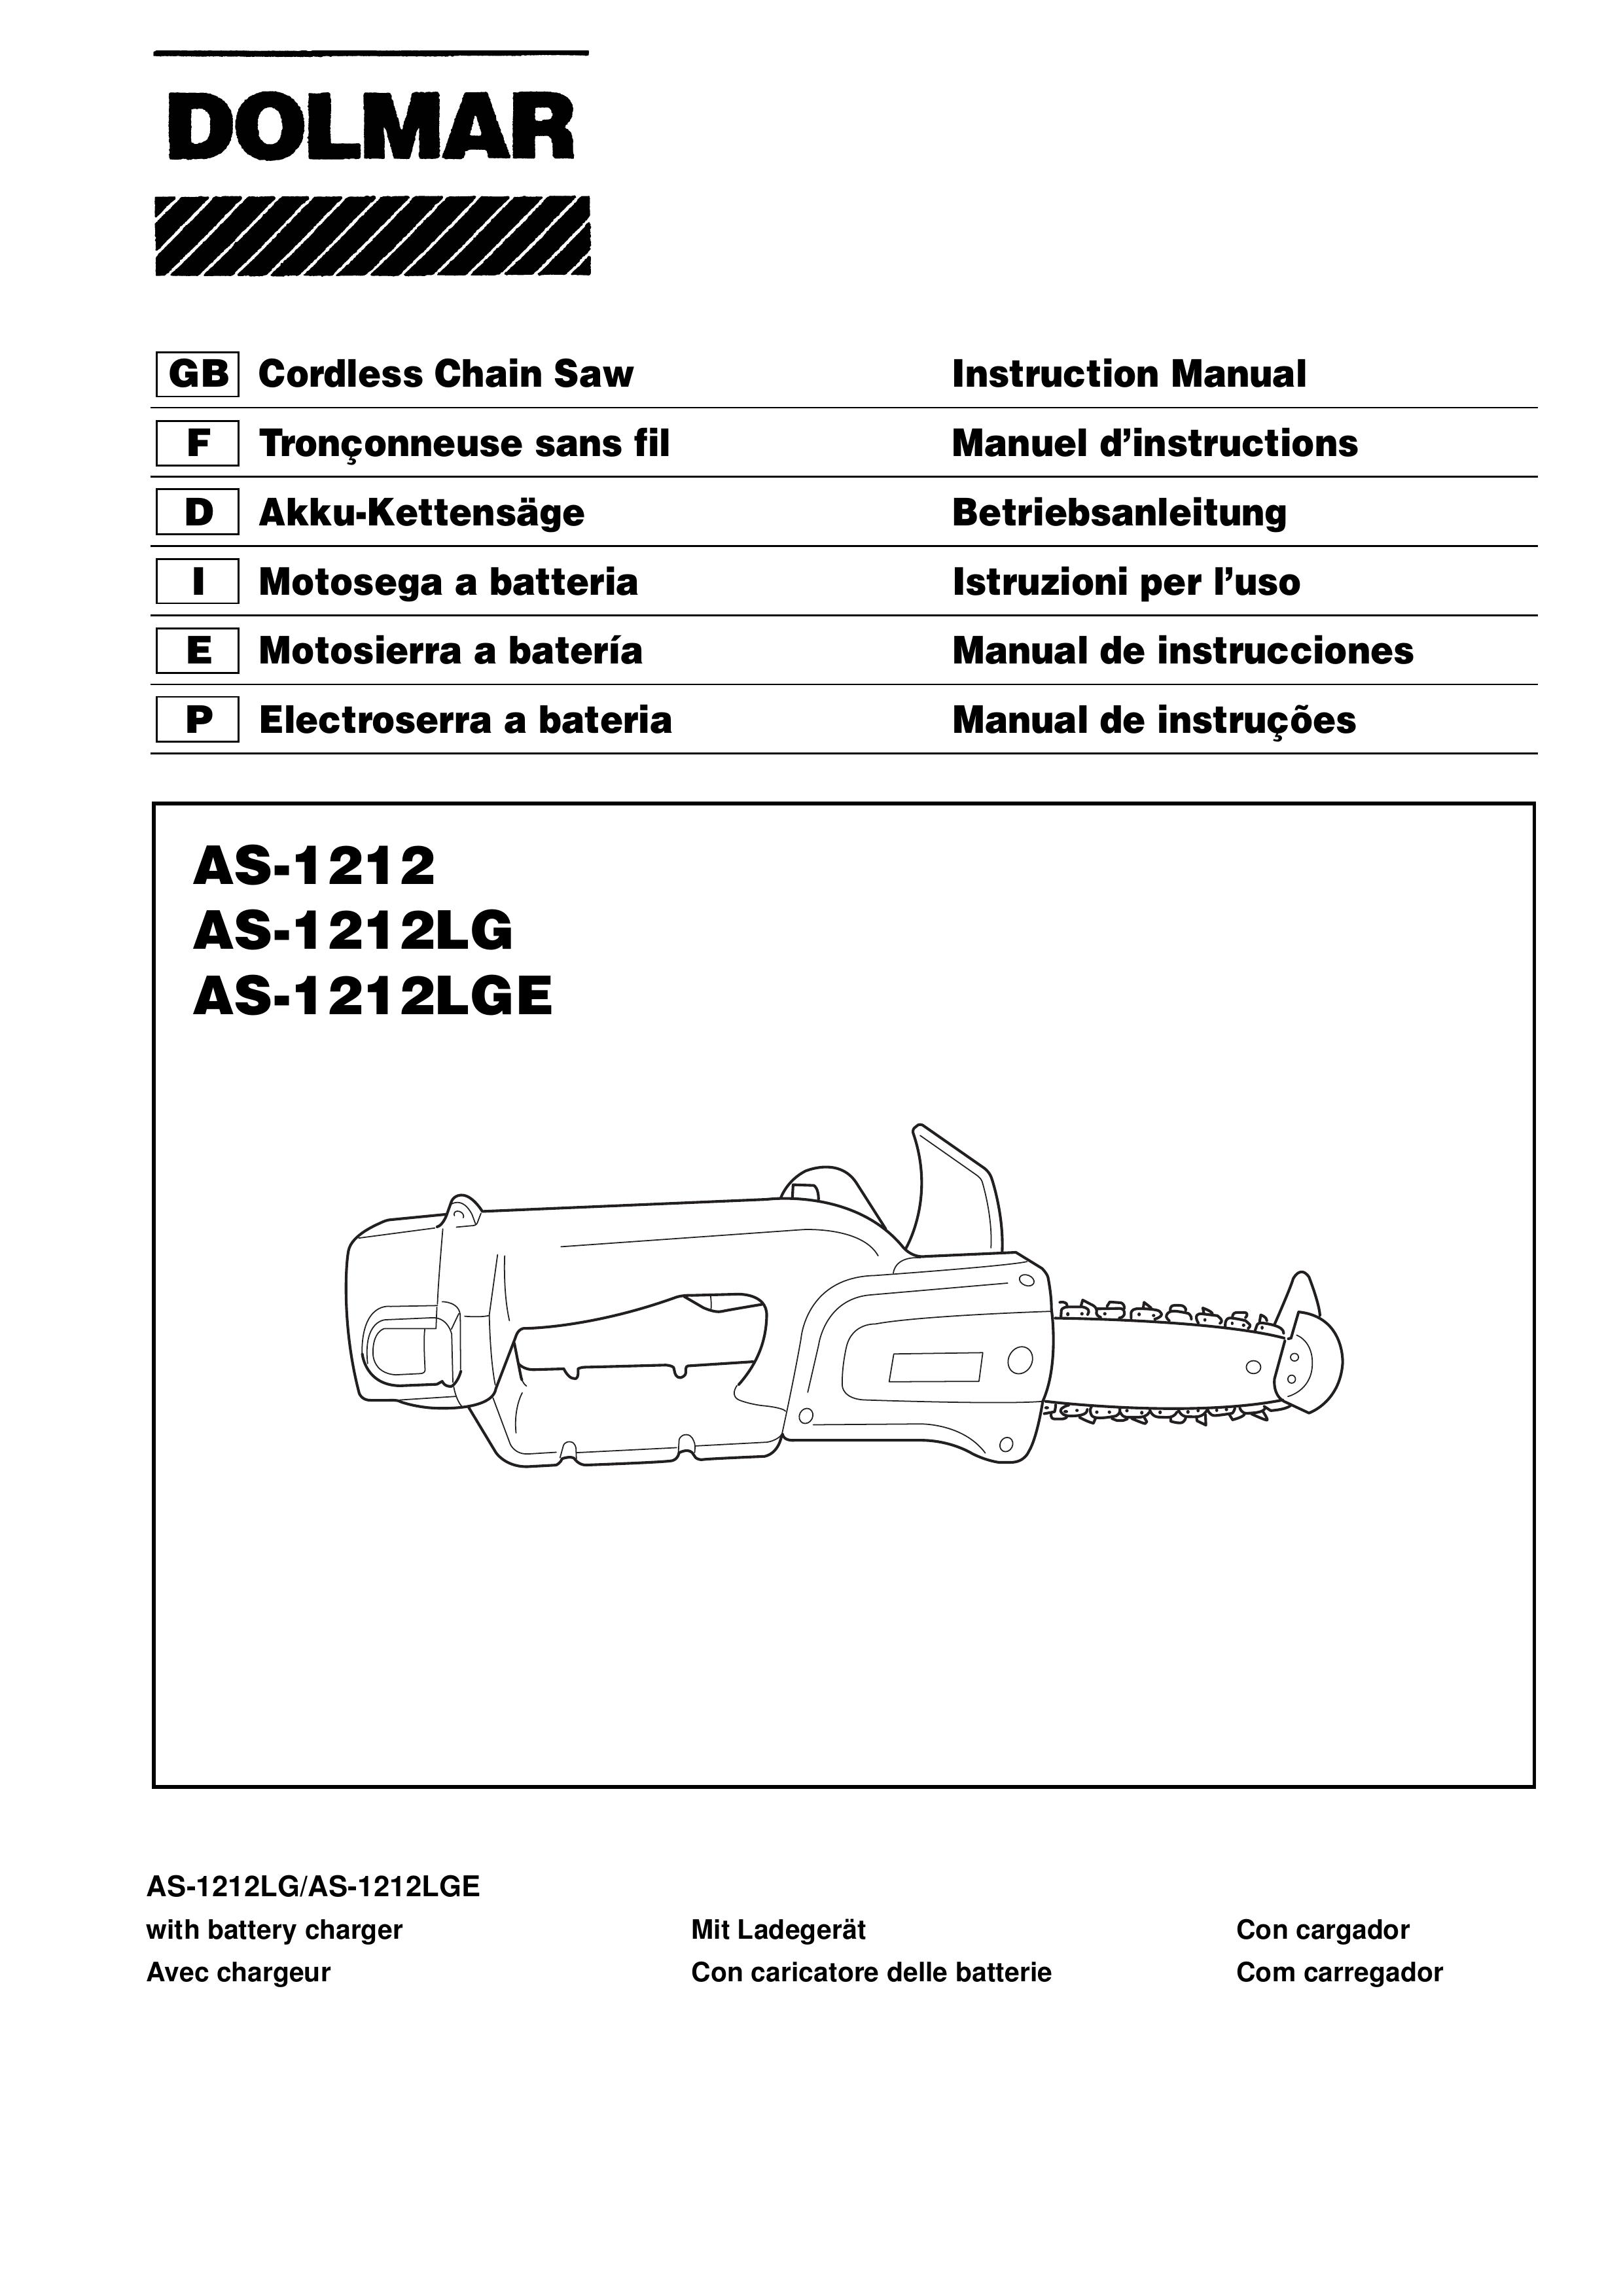 Dolmar AS-1212, AS-1212LG, AS-1212LGE Chainsaw User Manual